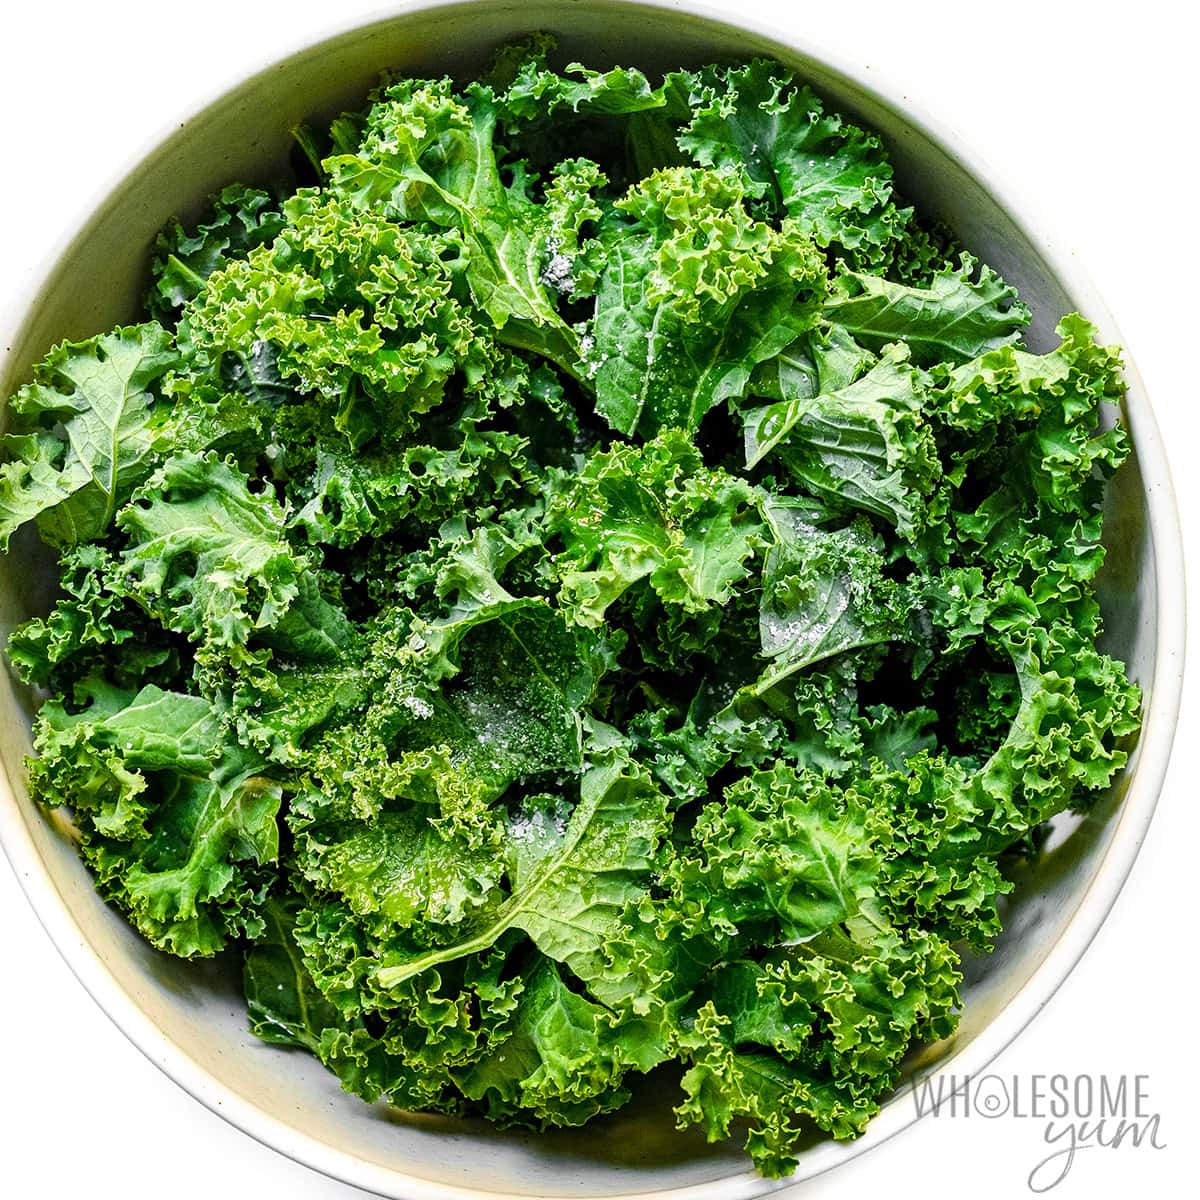 Fresh kale in a bowl with seasonings.